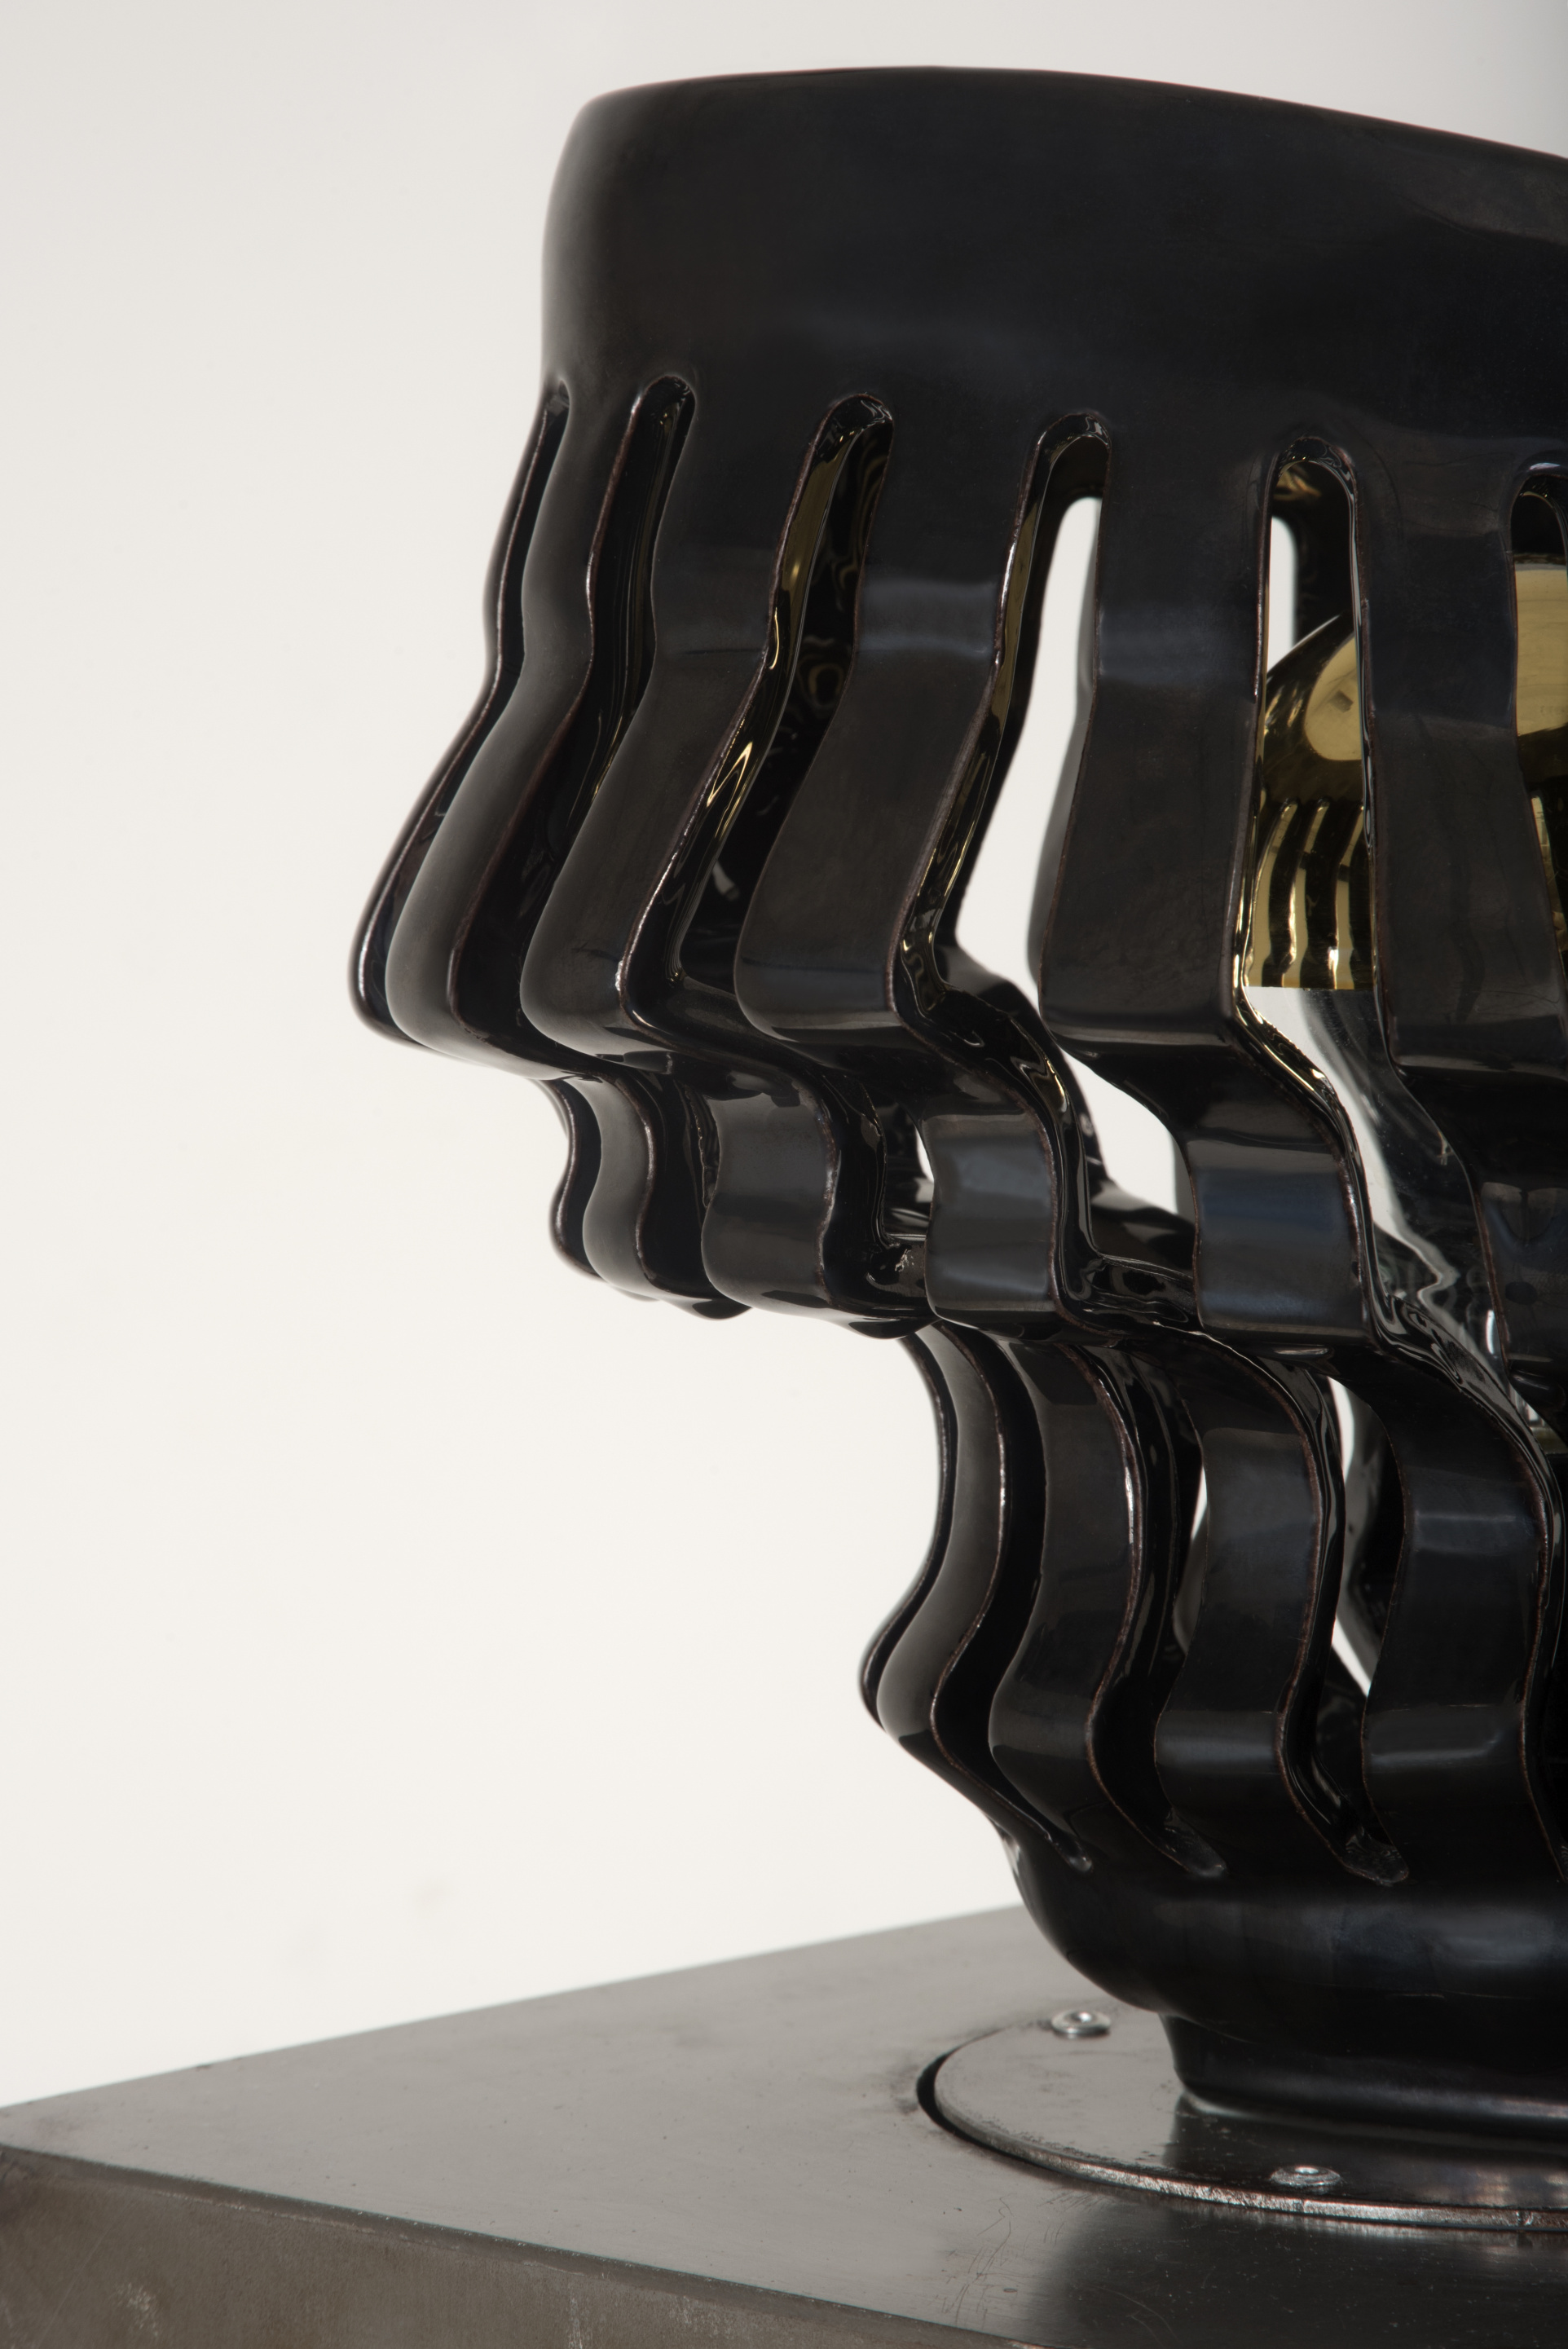 kurvo - fLuxus - 2 - Slip Casting - Metallic Black Glaze Ceramic Lamp - 2016 - Detail - High Res